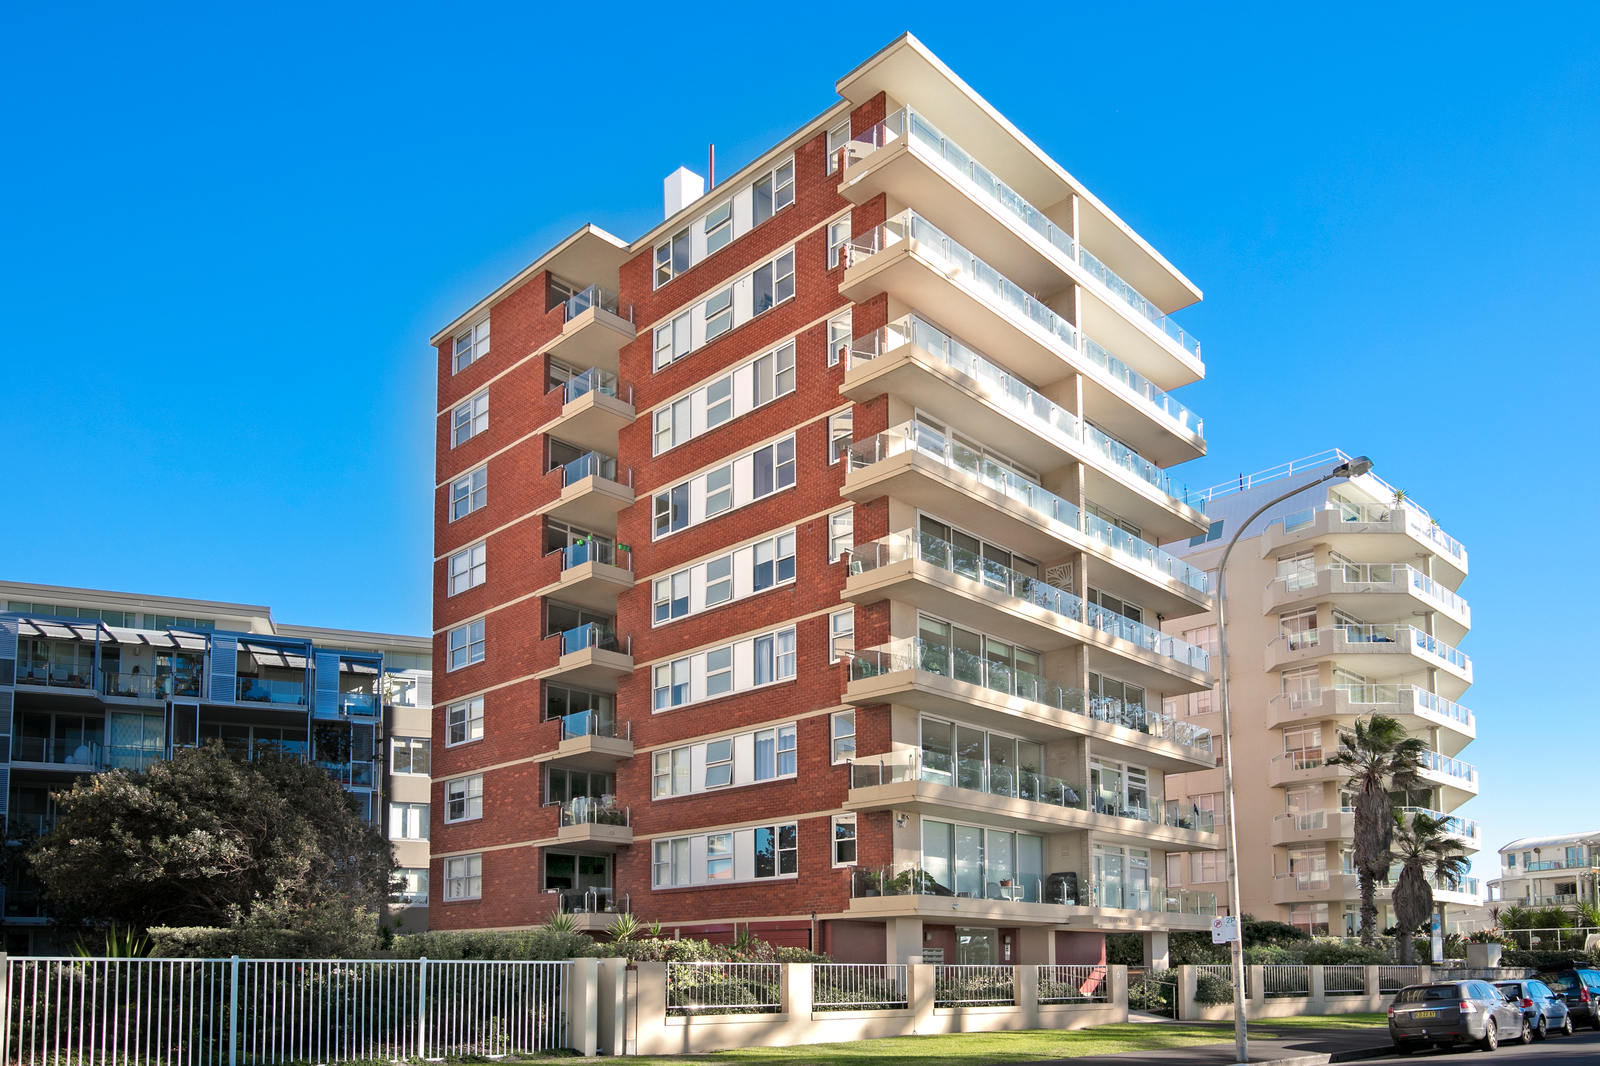 Unique Apartments For Sale Manly Sydney with Simple Decor